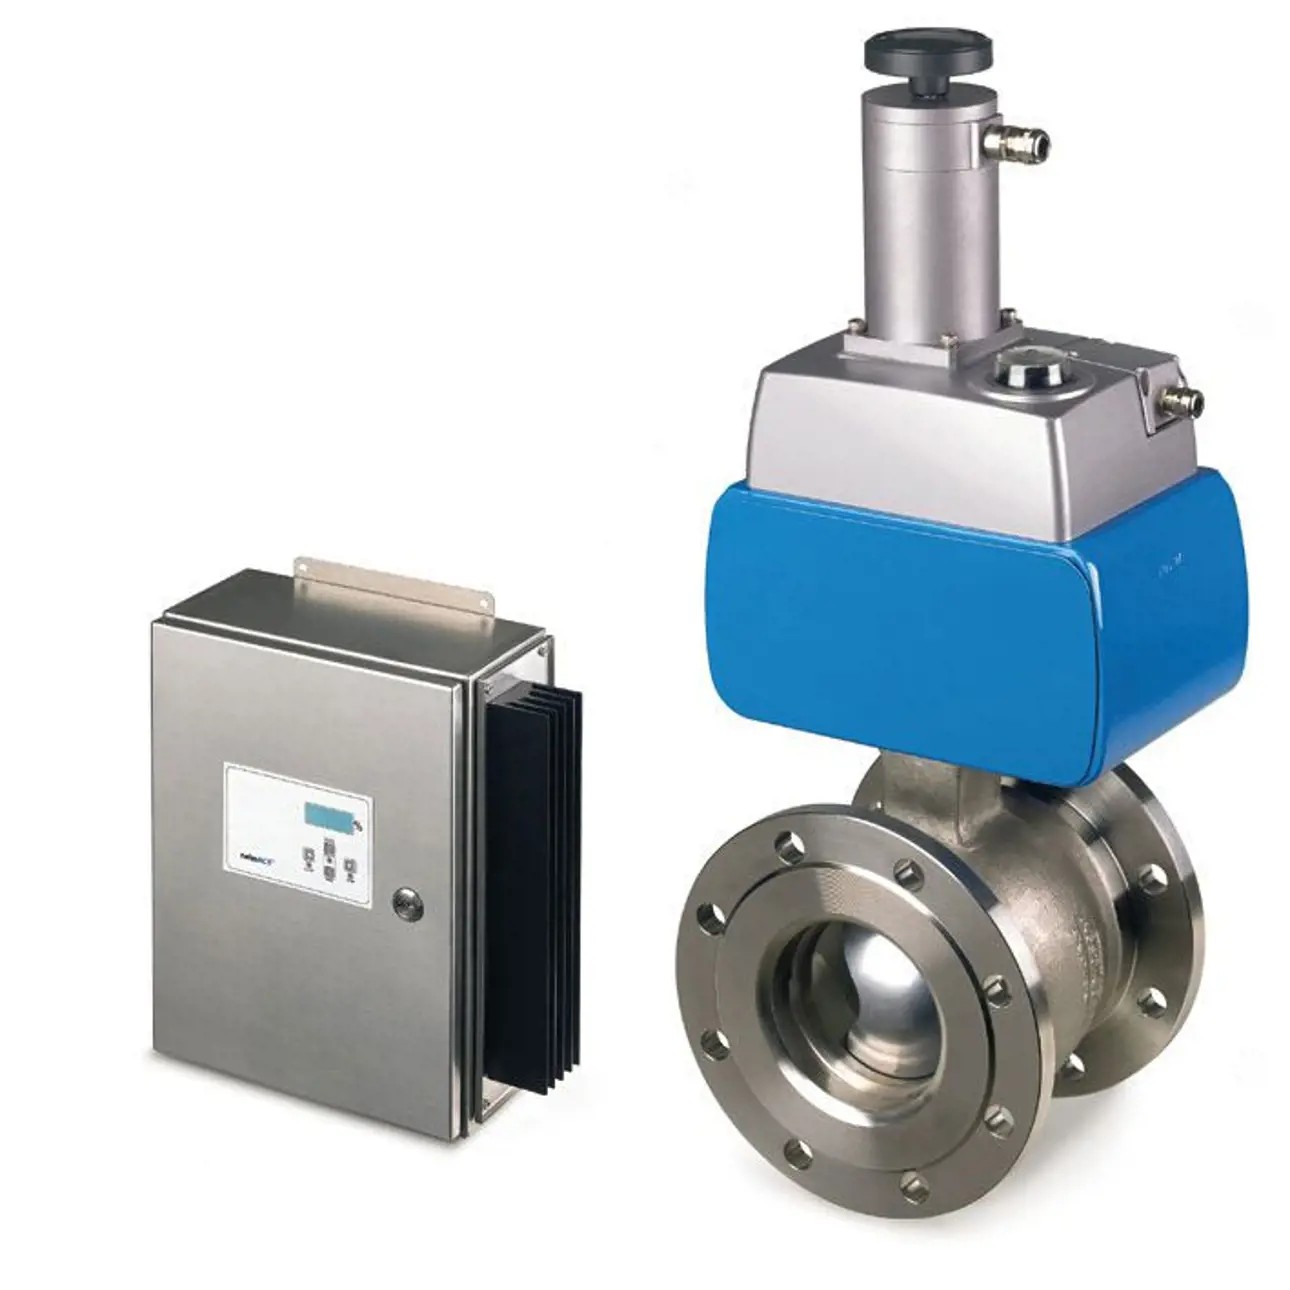 ValmetNelesAce™ basis weight control valve